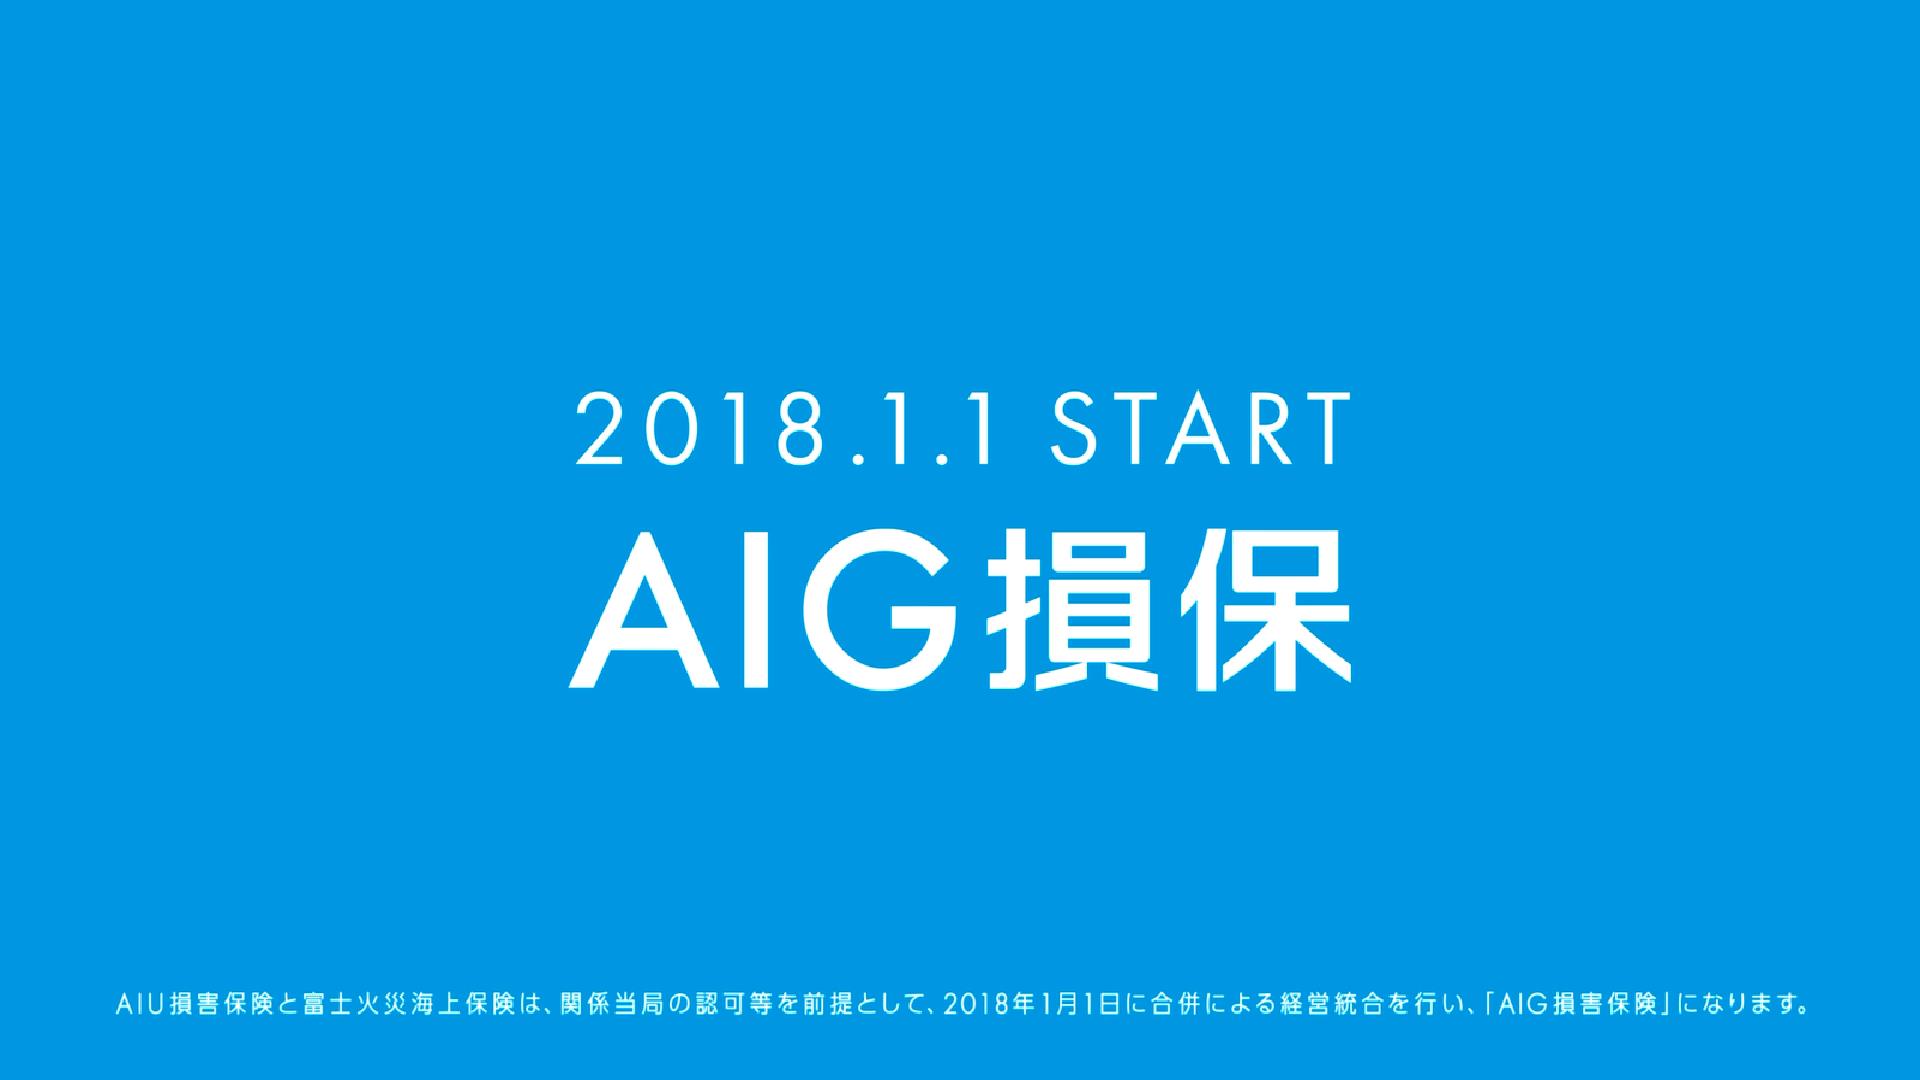 Aig損保 誕生に向けた新テレビcm Unite As One 全国で放映開始 Aigジャパン ホールディングス株式会社のプレスリリース